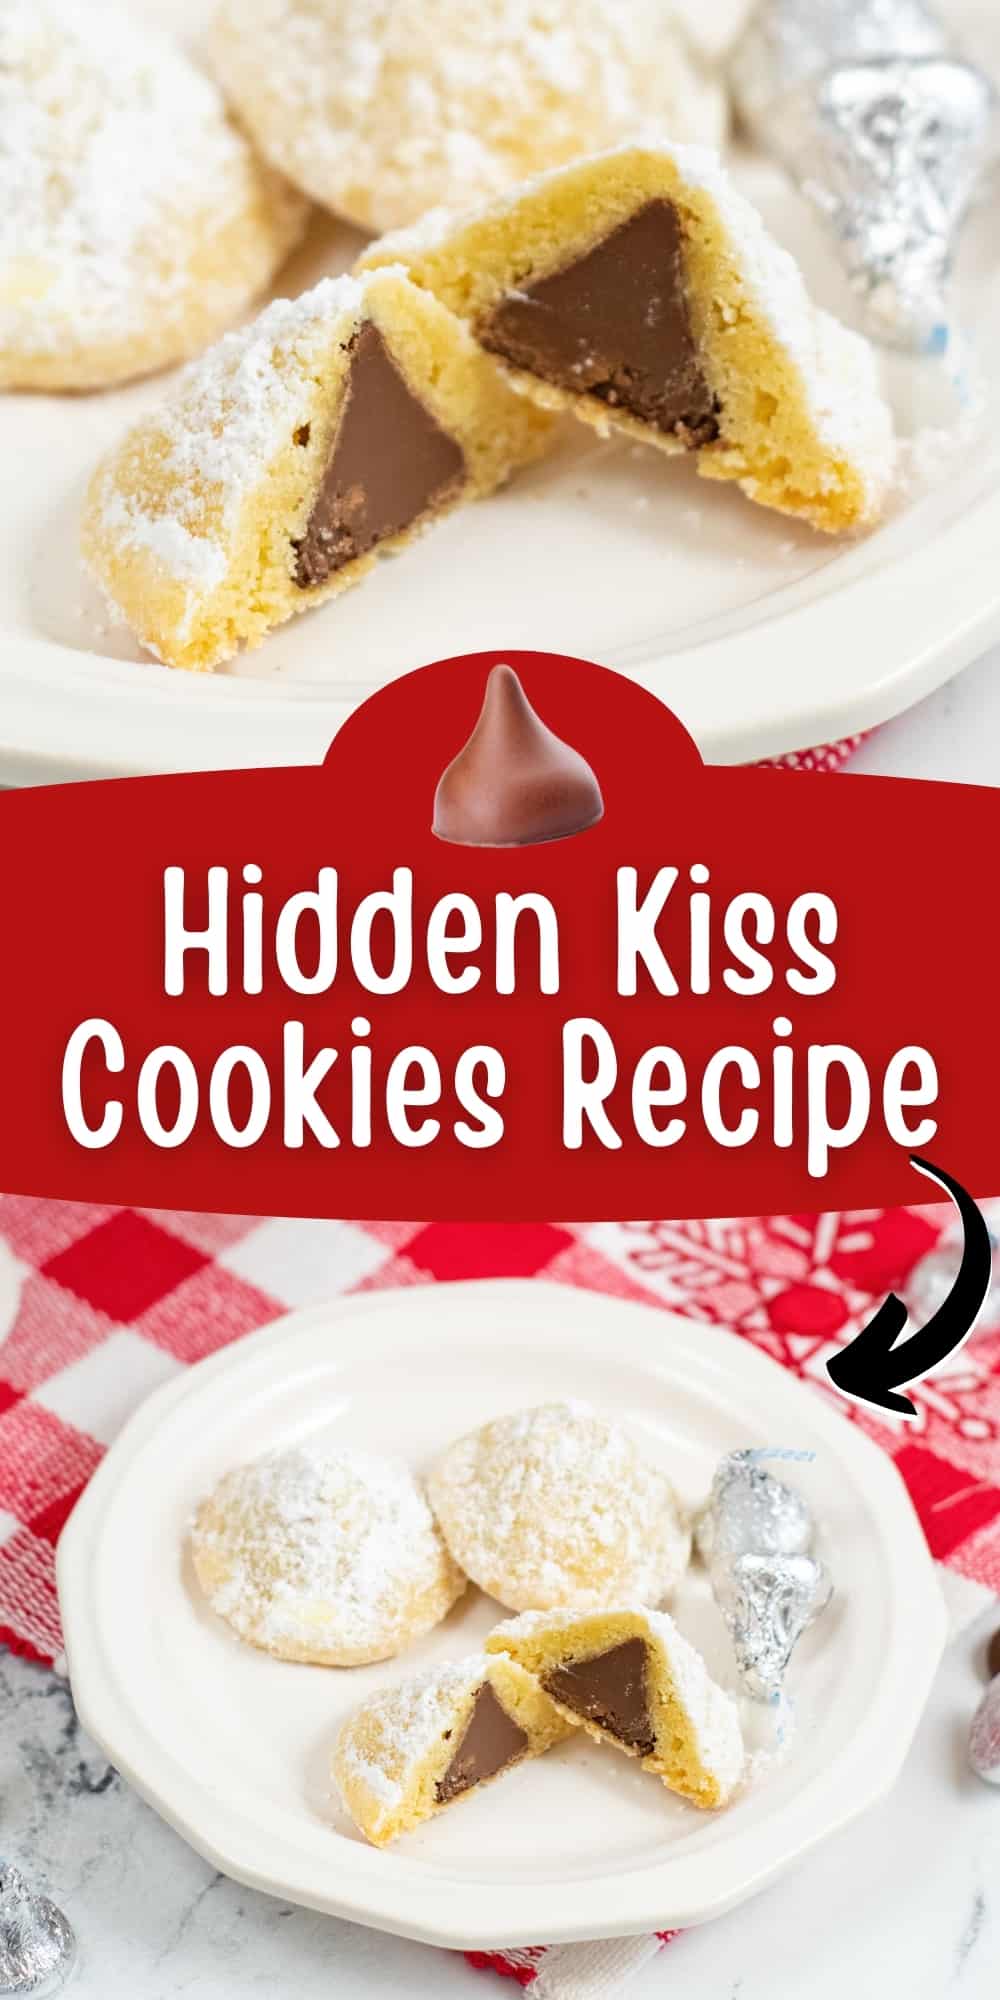 Hidden Kiss Cookies Recipe pin image